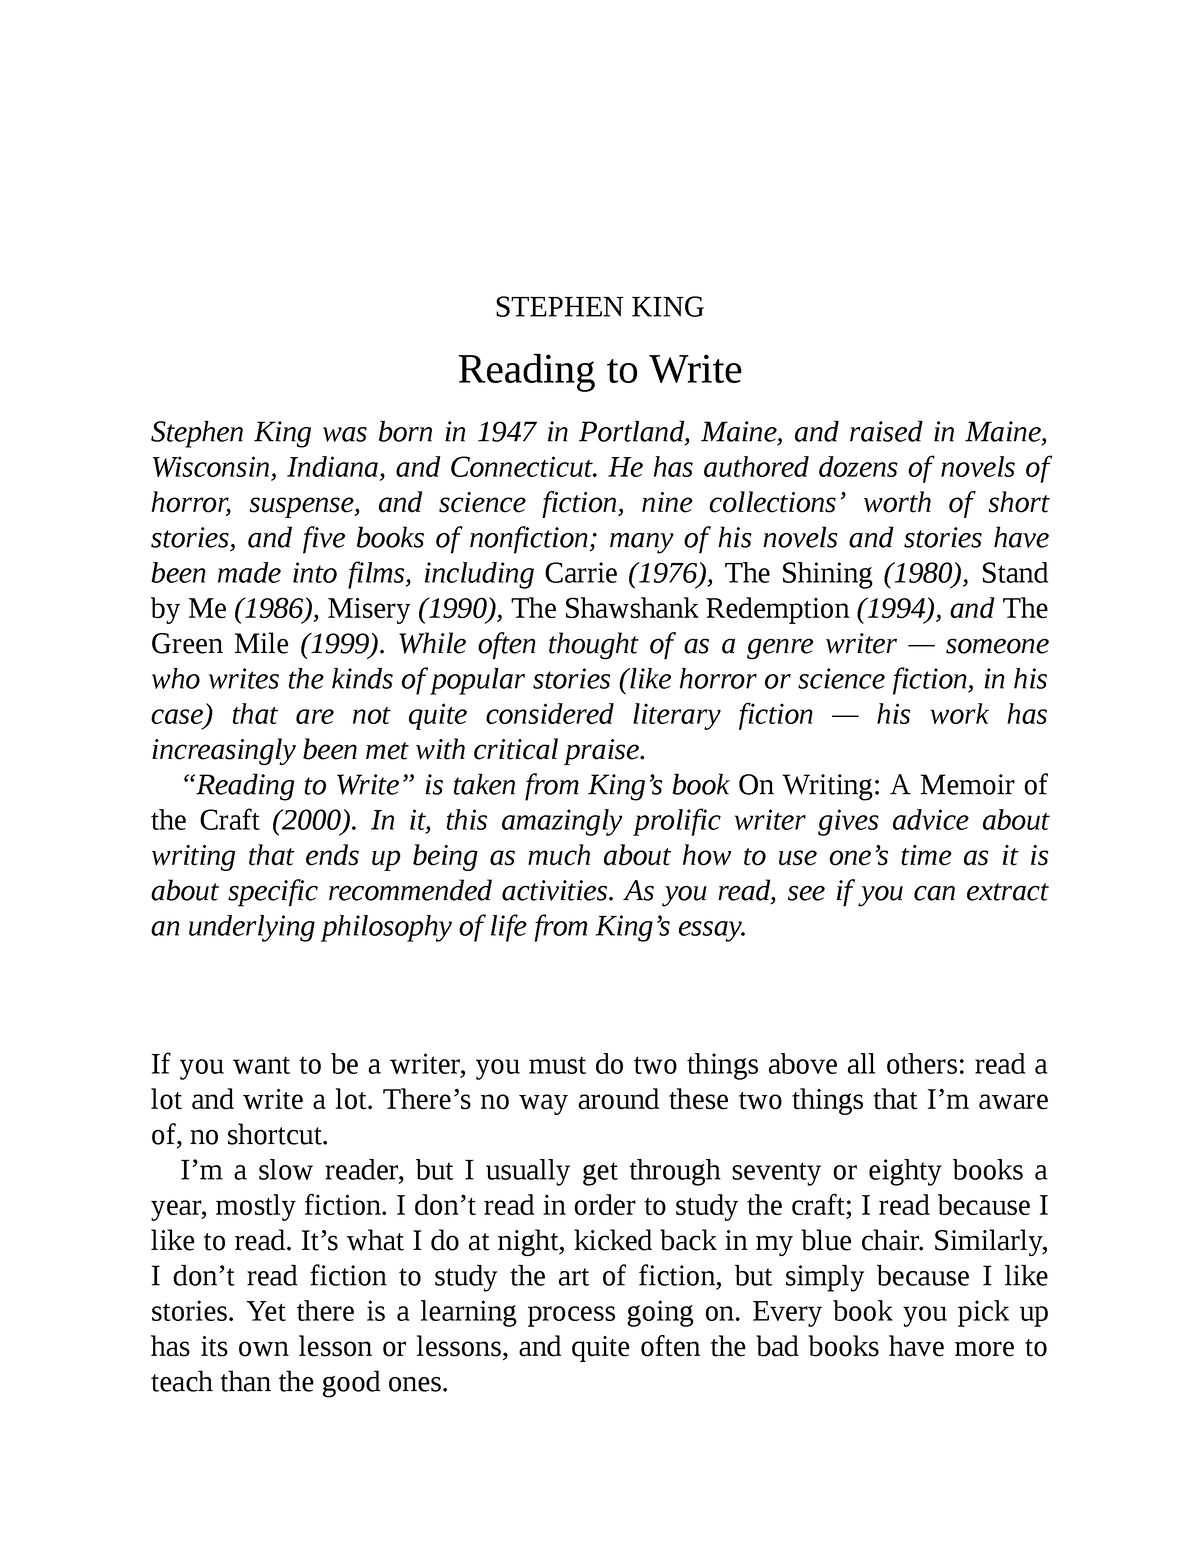 stephen king essay reading to write